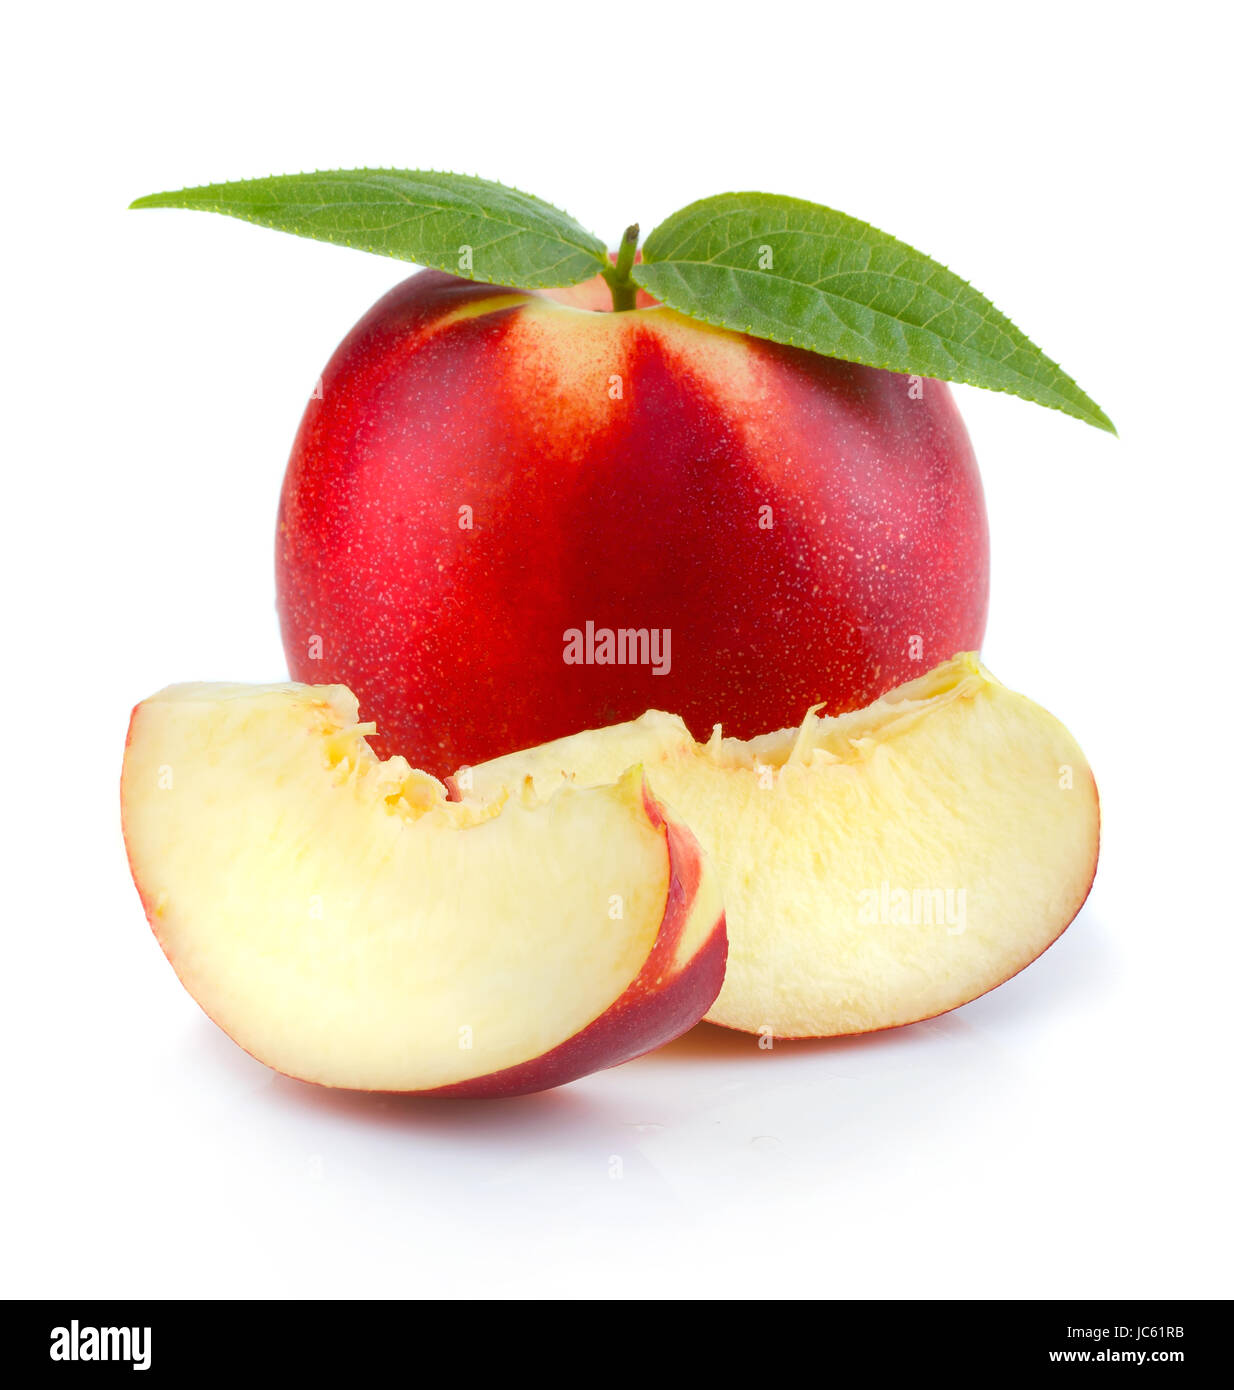 Ripe peach (nectarine) fruit with slices isolated on white background Stock Photo